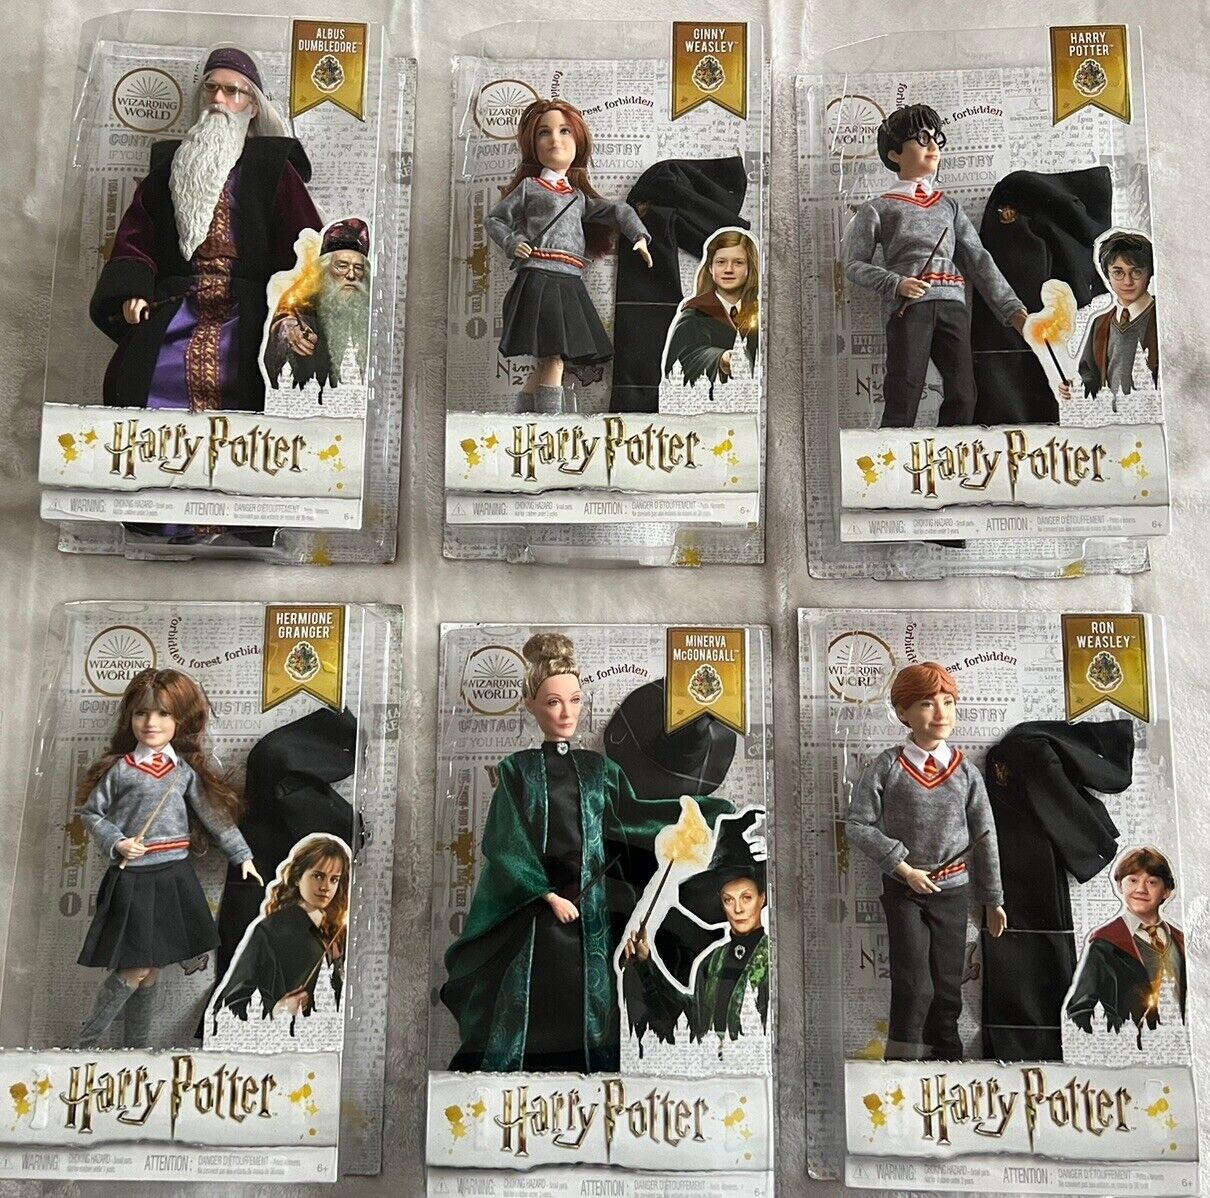 Full Set of 6 Harry Potter Wizarding World Dolls/Figures by Mattel - Brand New.